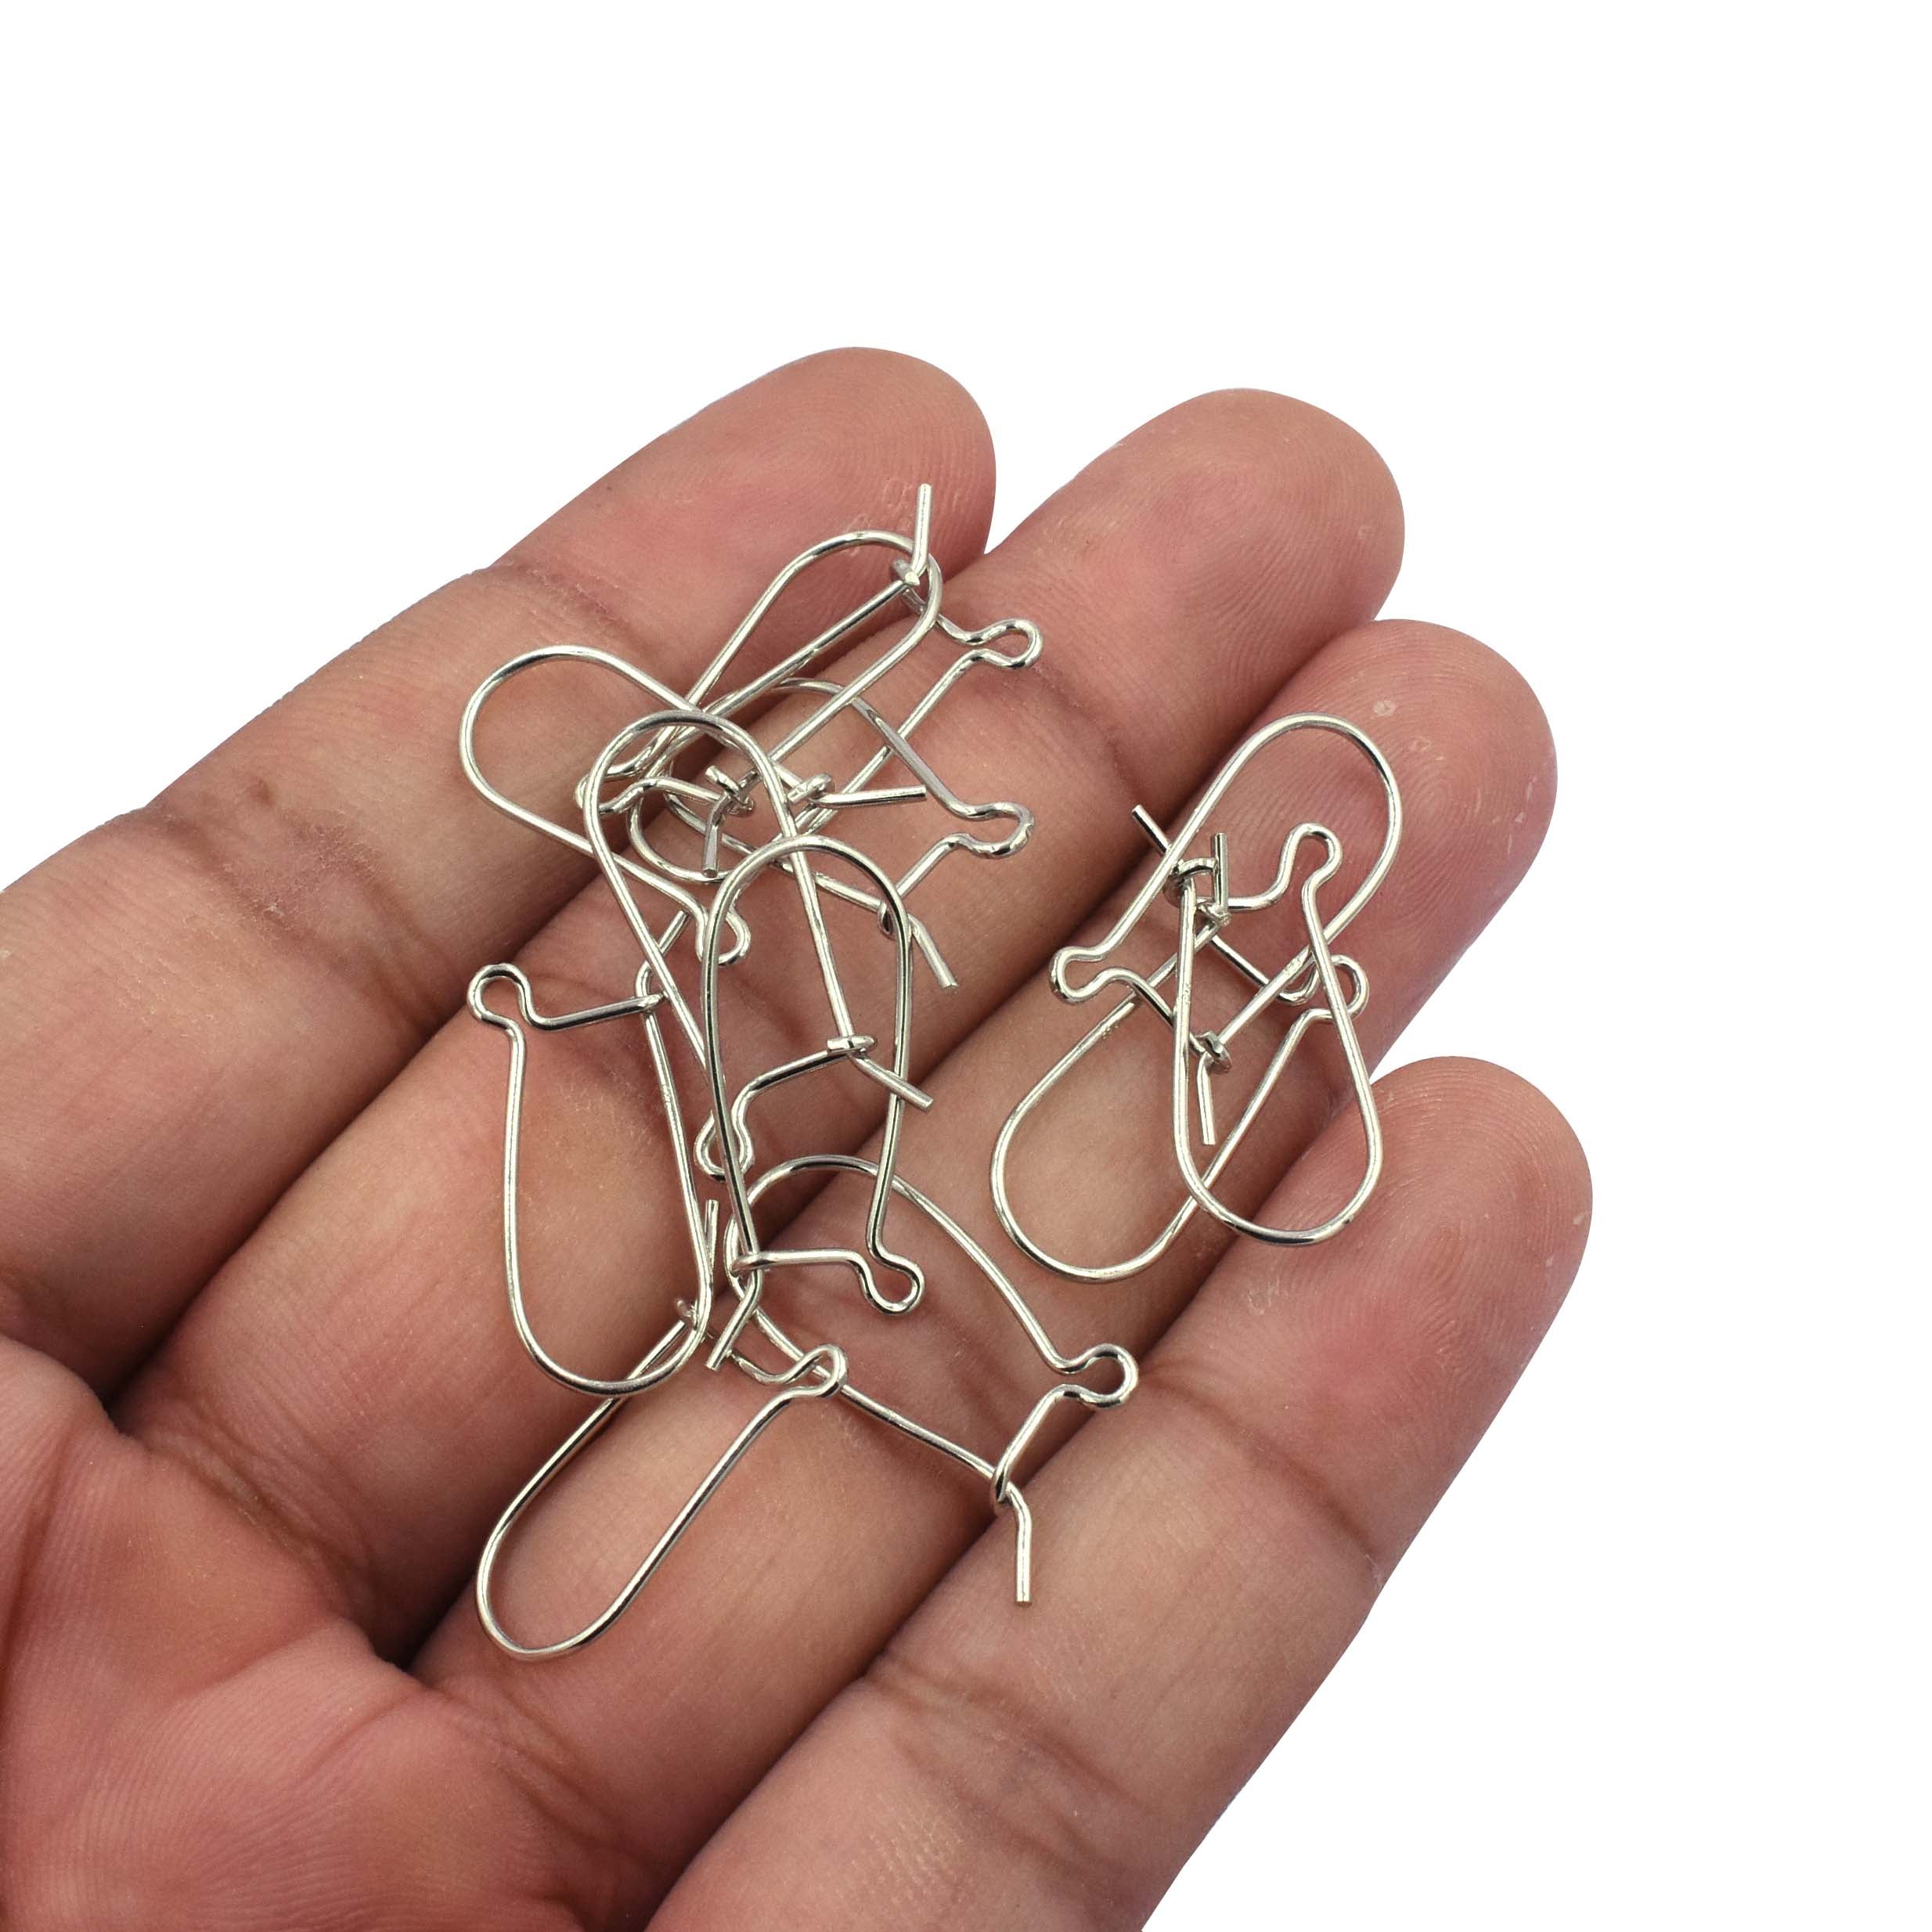 Kidney Earwire Hook 23x10 mm Sterling Silver Ear Wire Sold by 2 Pairs